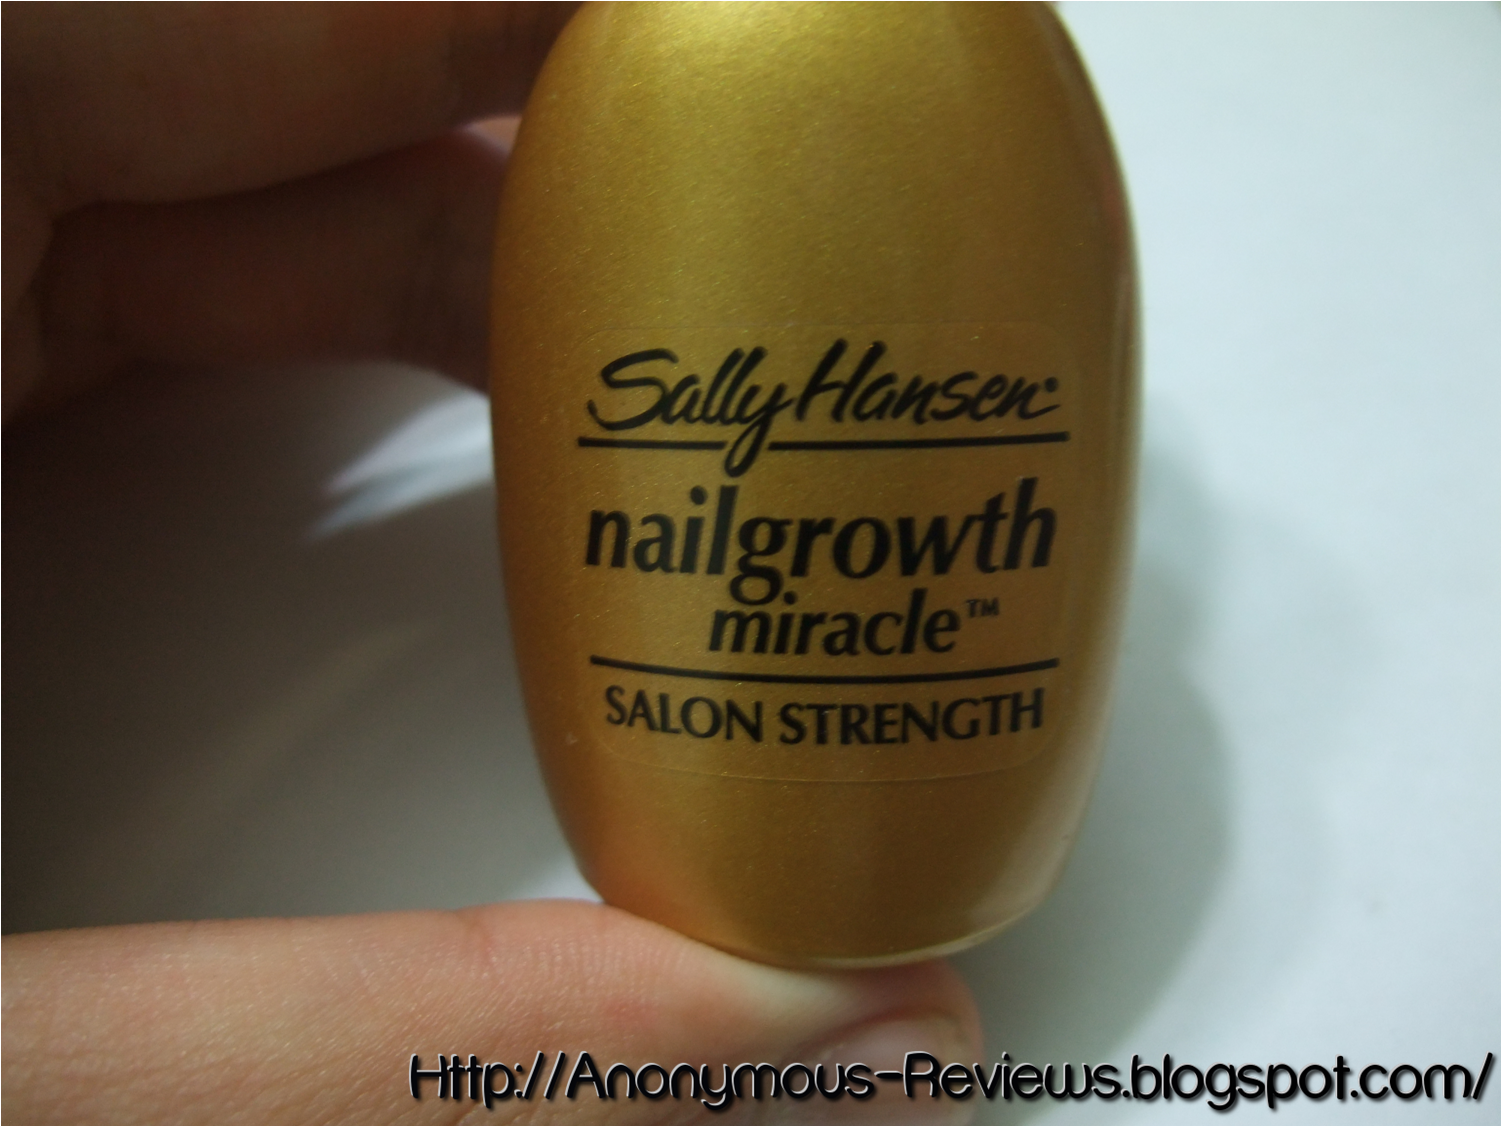 Sally Hansen's Nail Miracle Growth Salon Strength